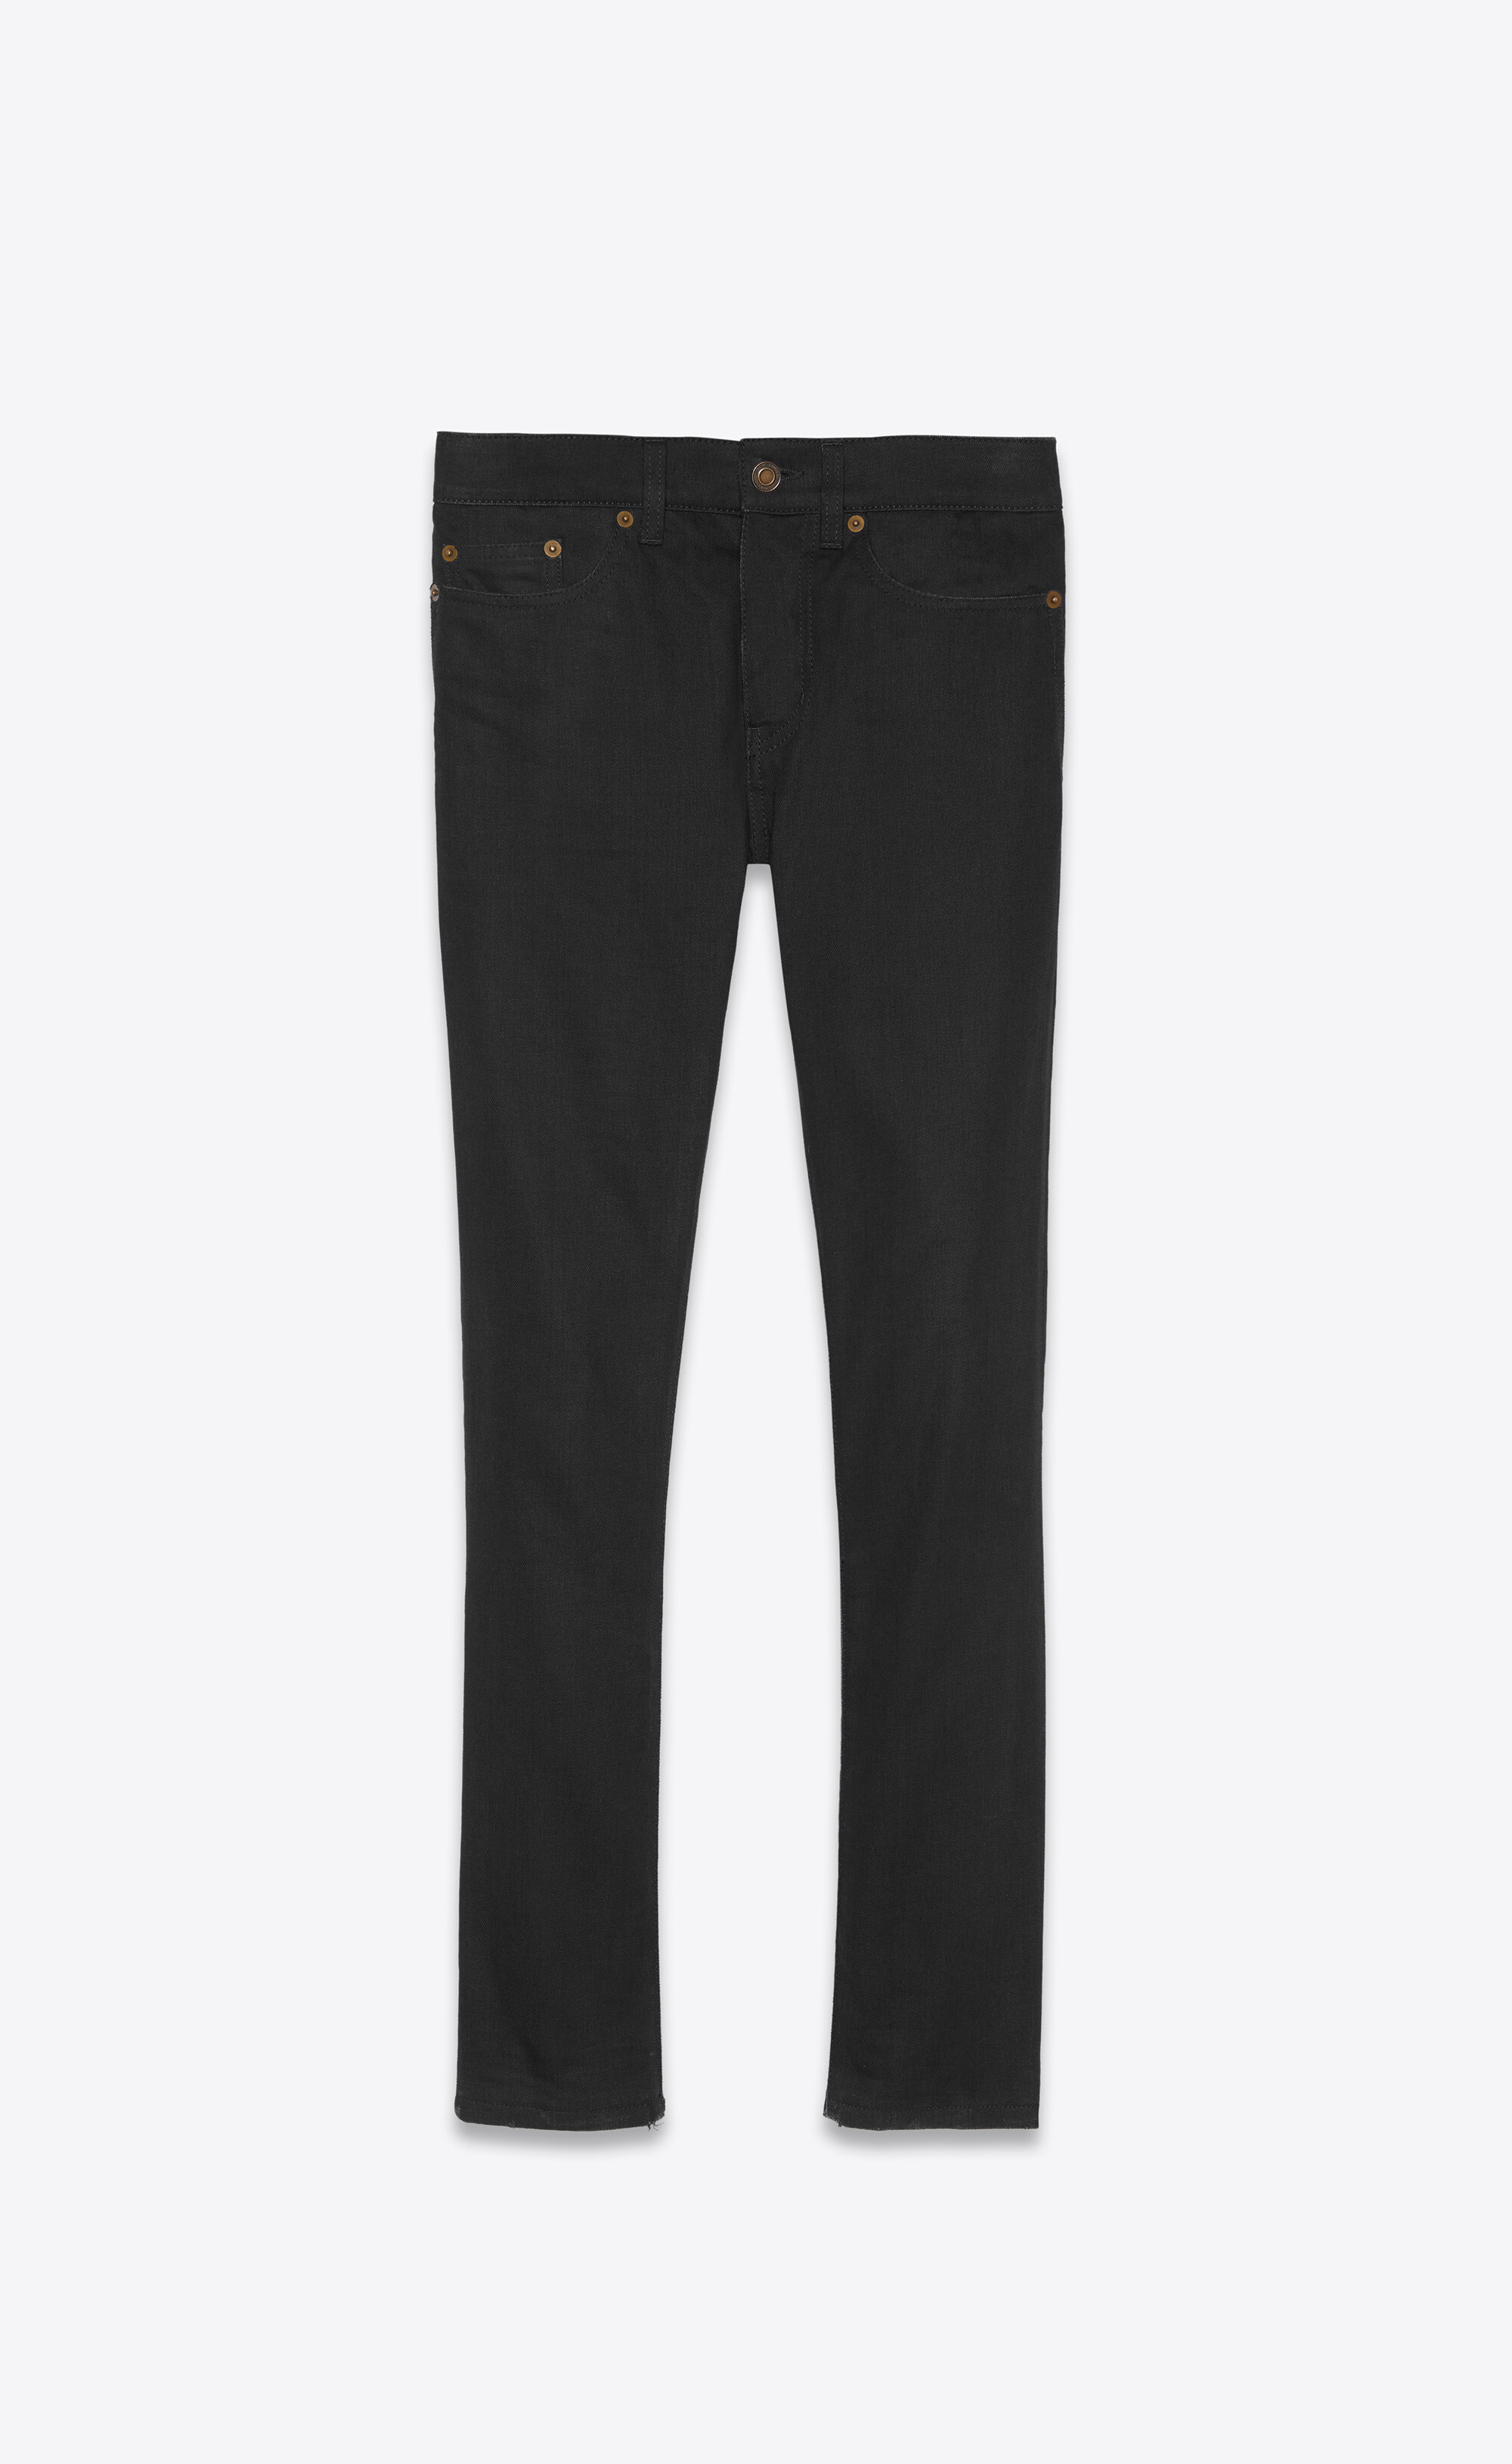 Saint Laurent Denim Beschichtete Skinny Jeans in Schwarz für Herren Herren Bekleidung Jeans Röhrenjeans 